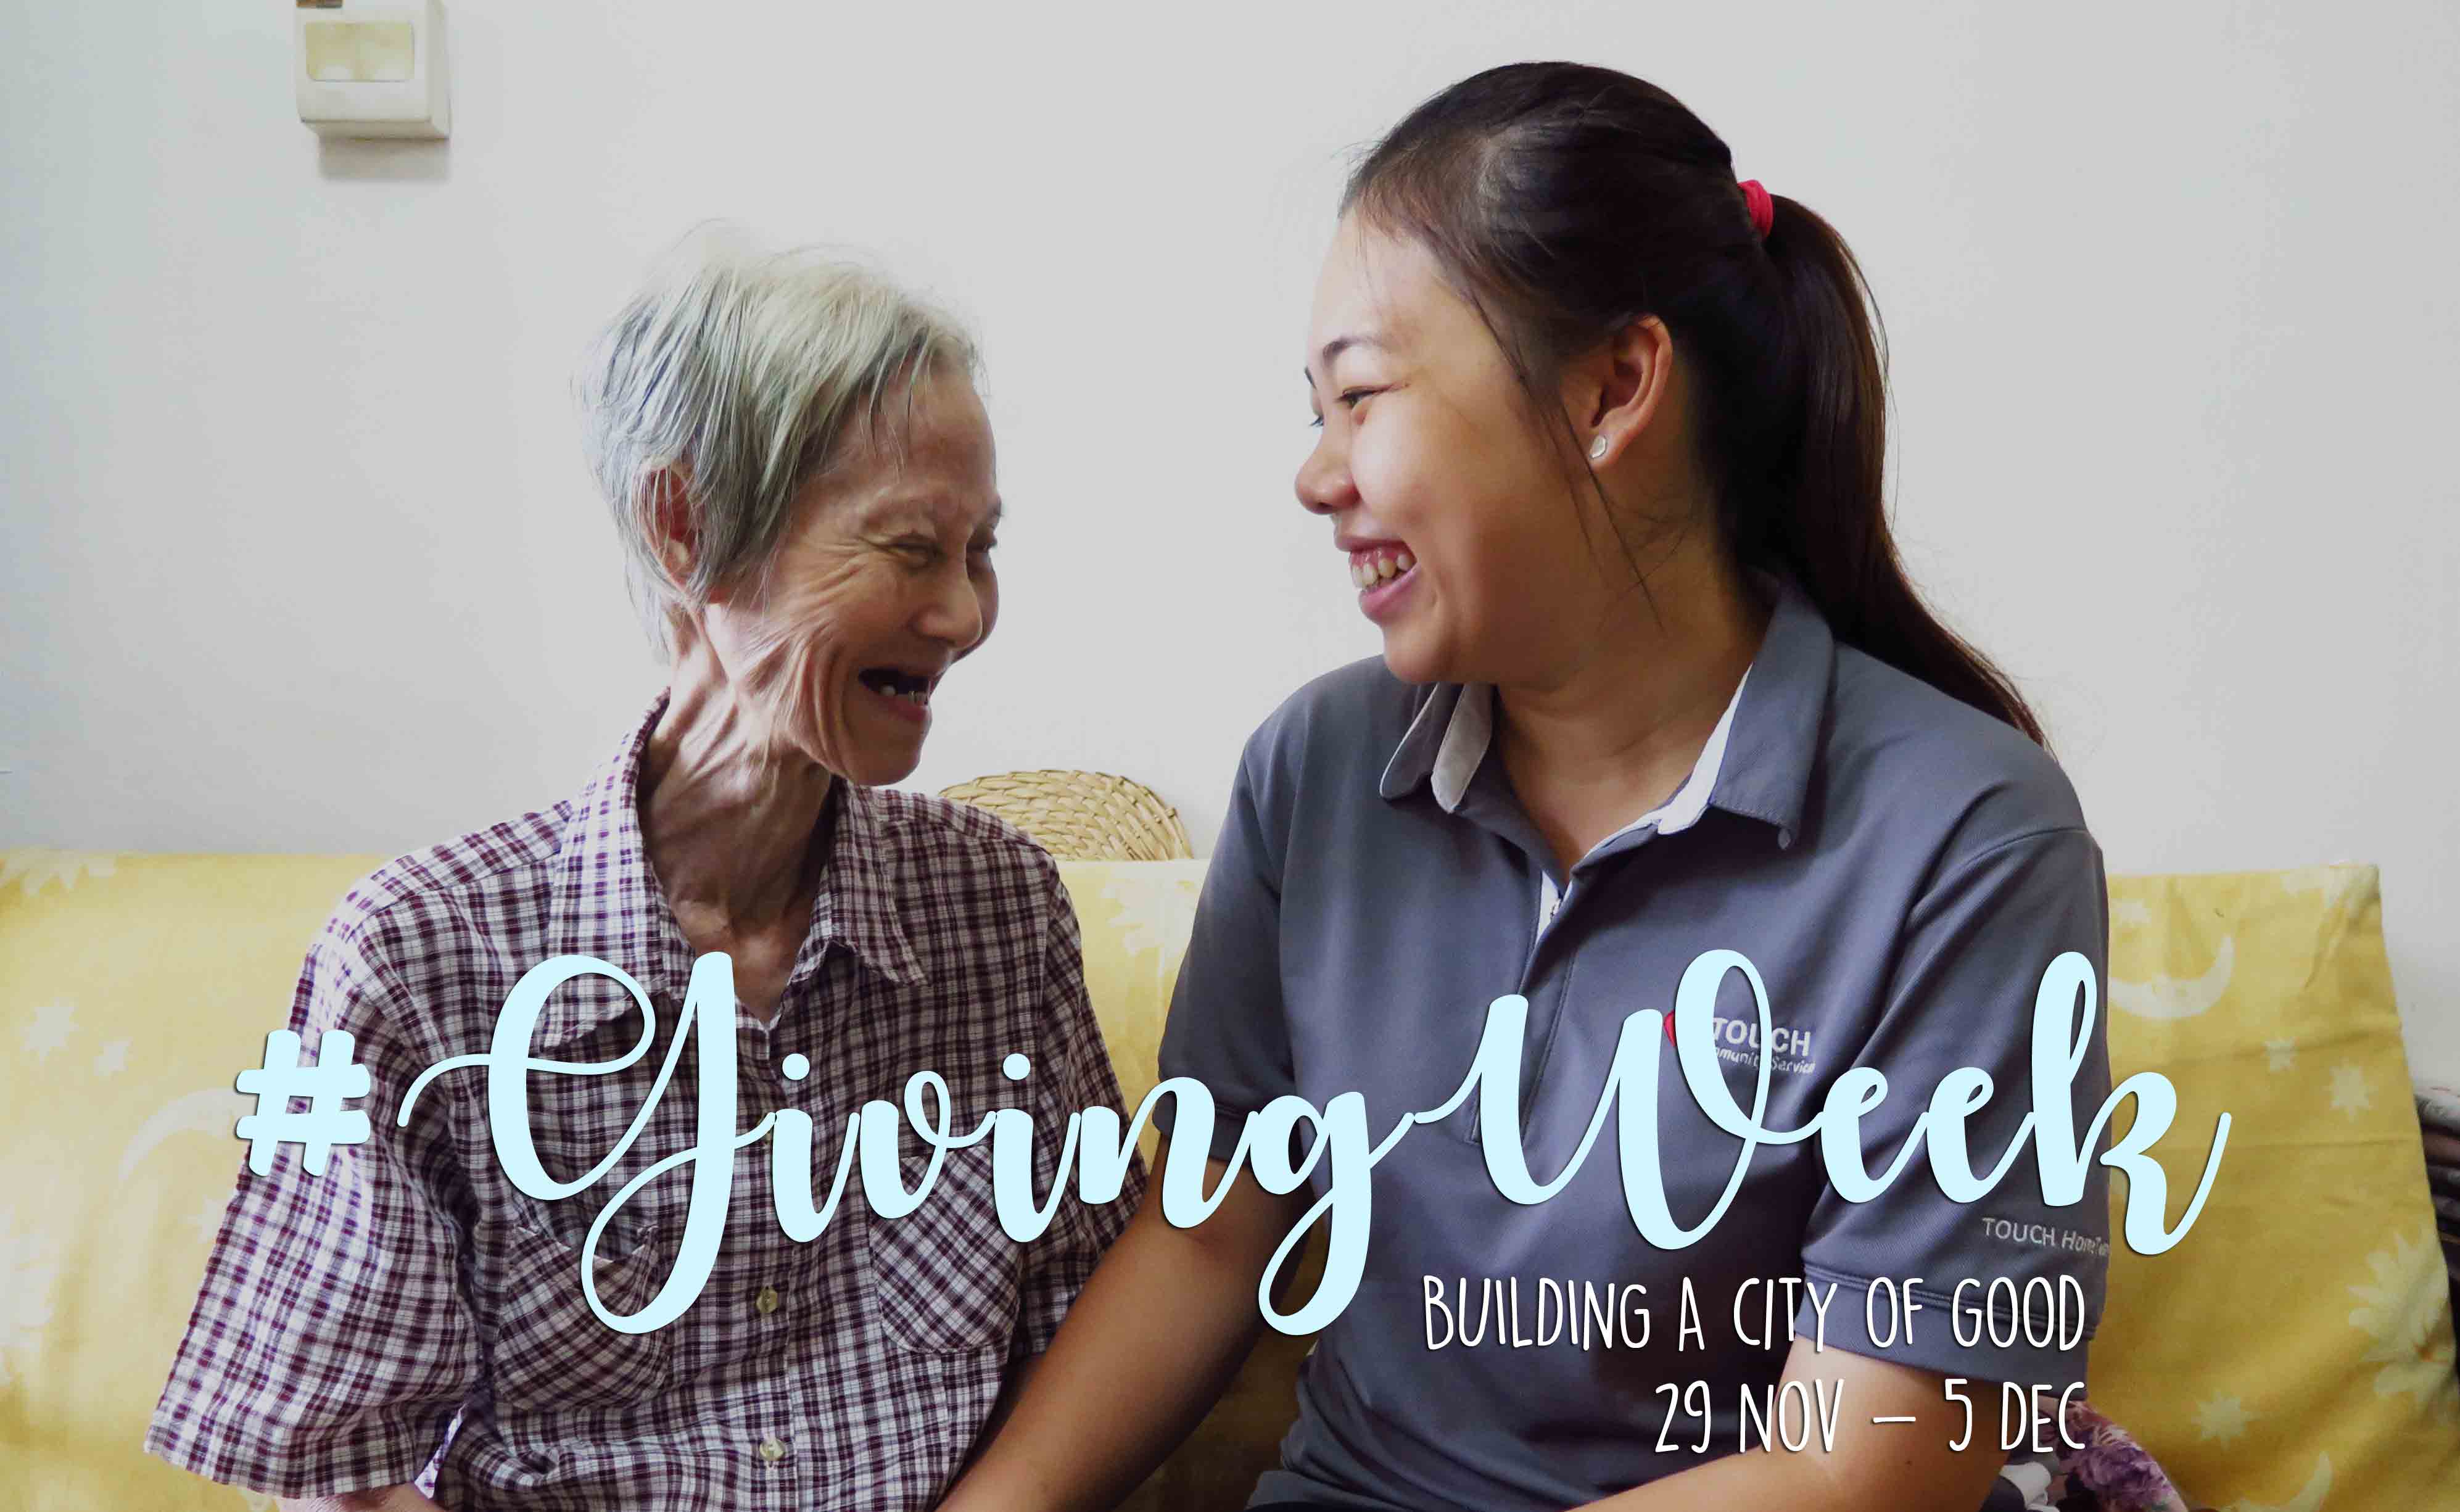 #GivingWeek: Make this a meaningful week!